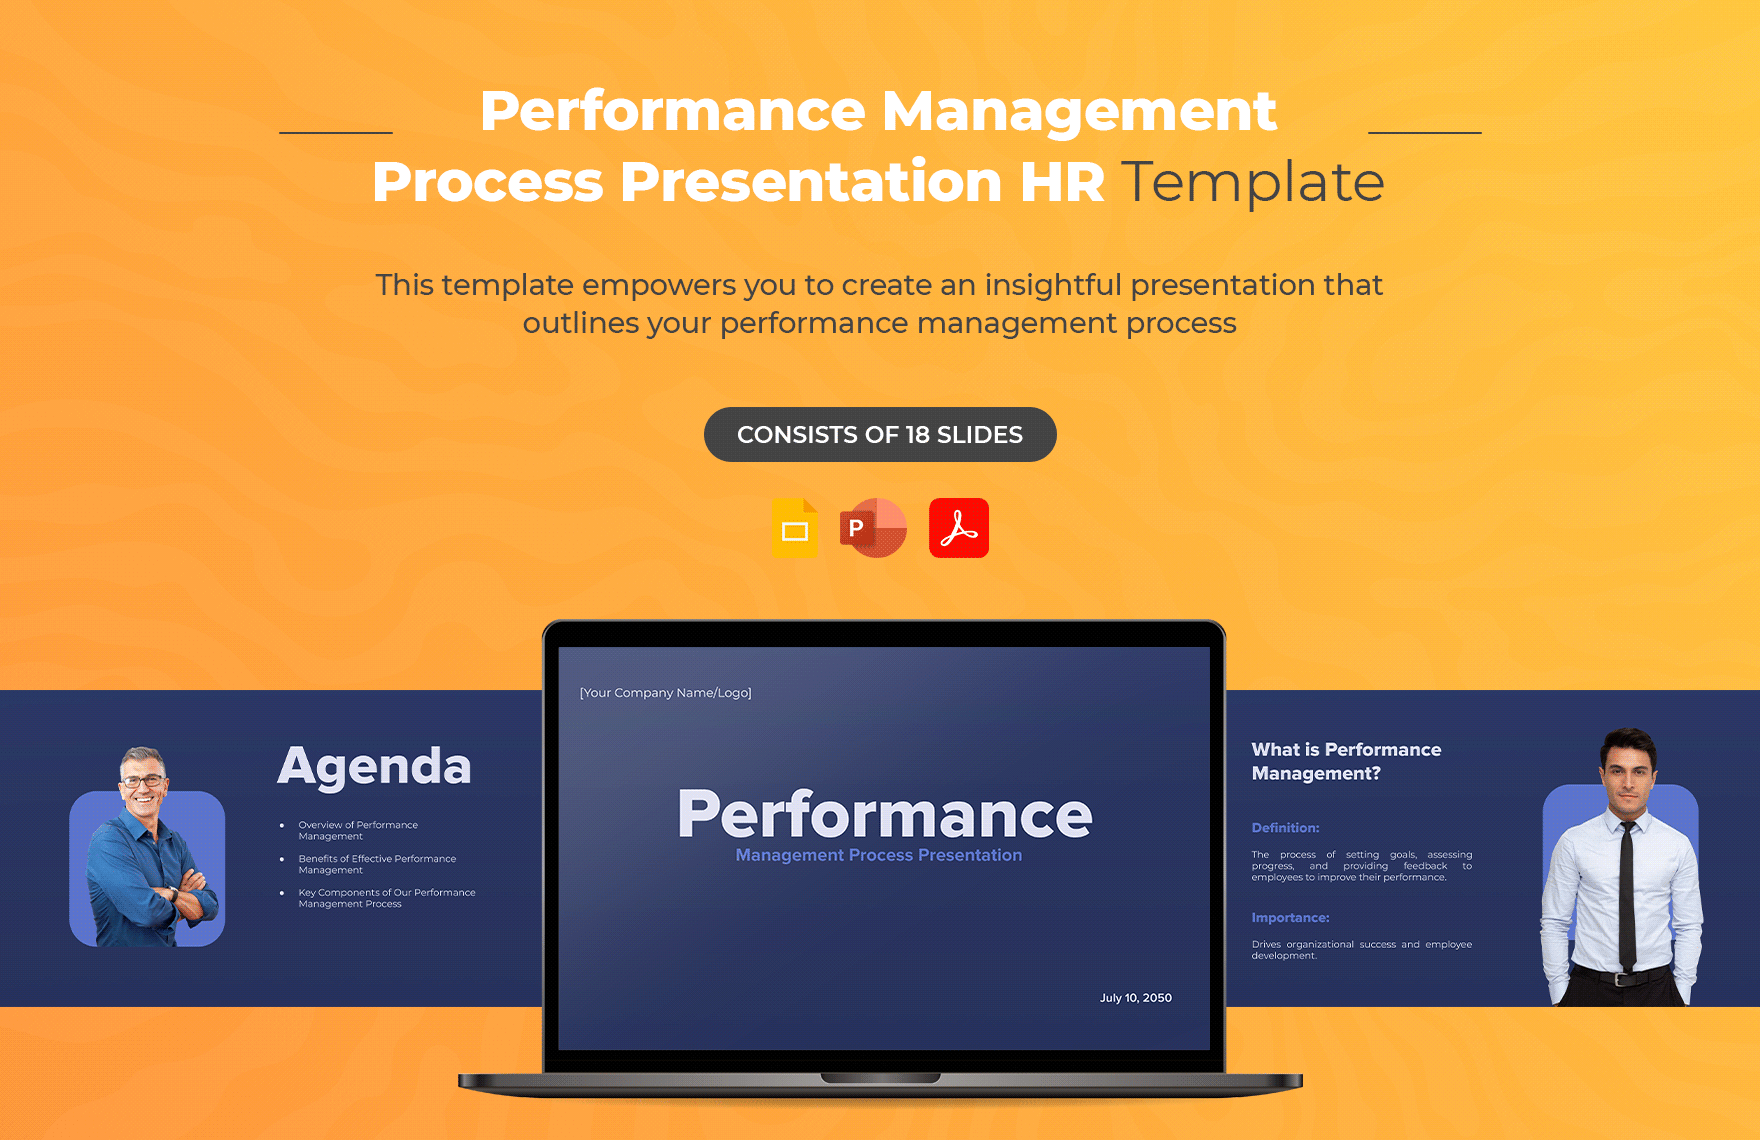 Performance Management Process Presentation HR Template